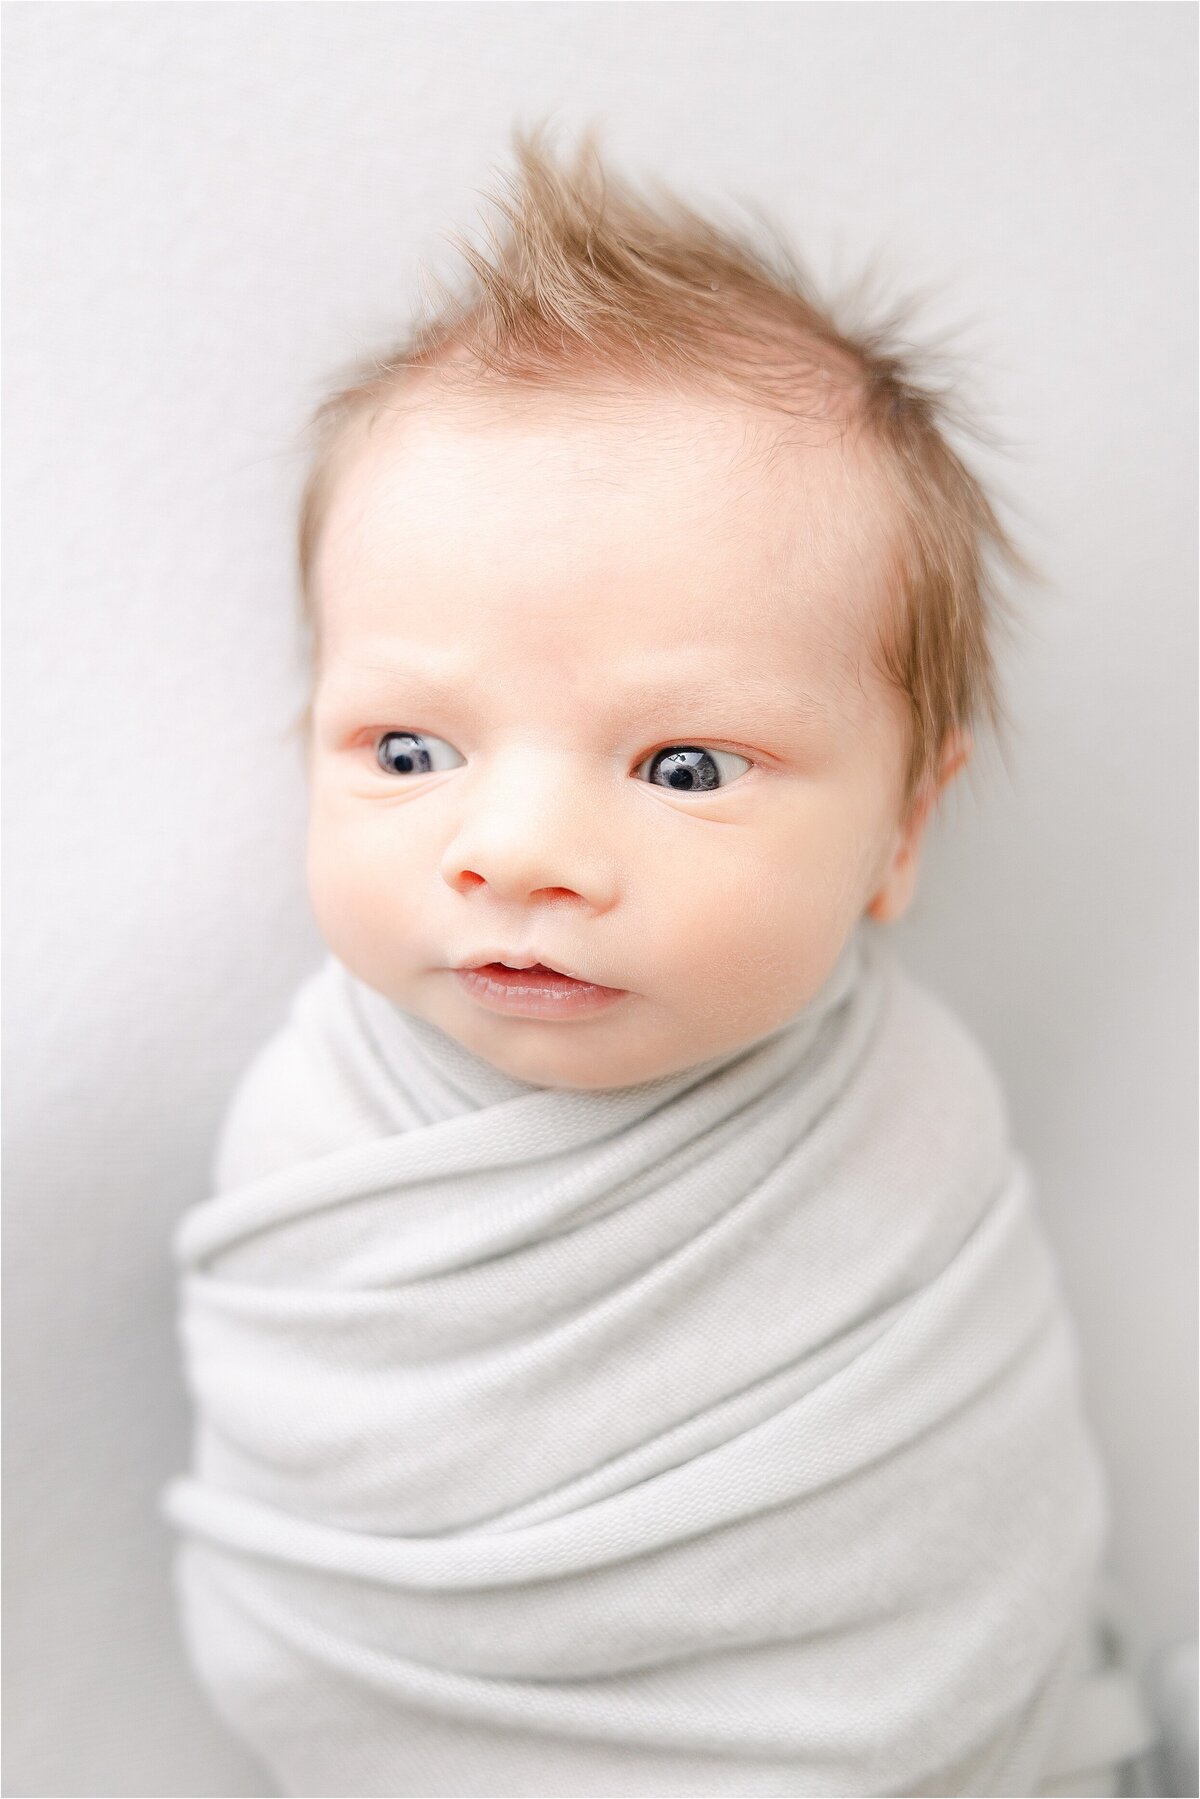 baby boy swaddled in grey at studio newborn session